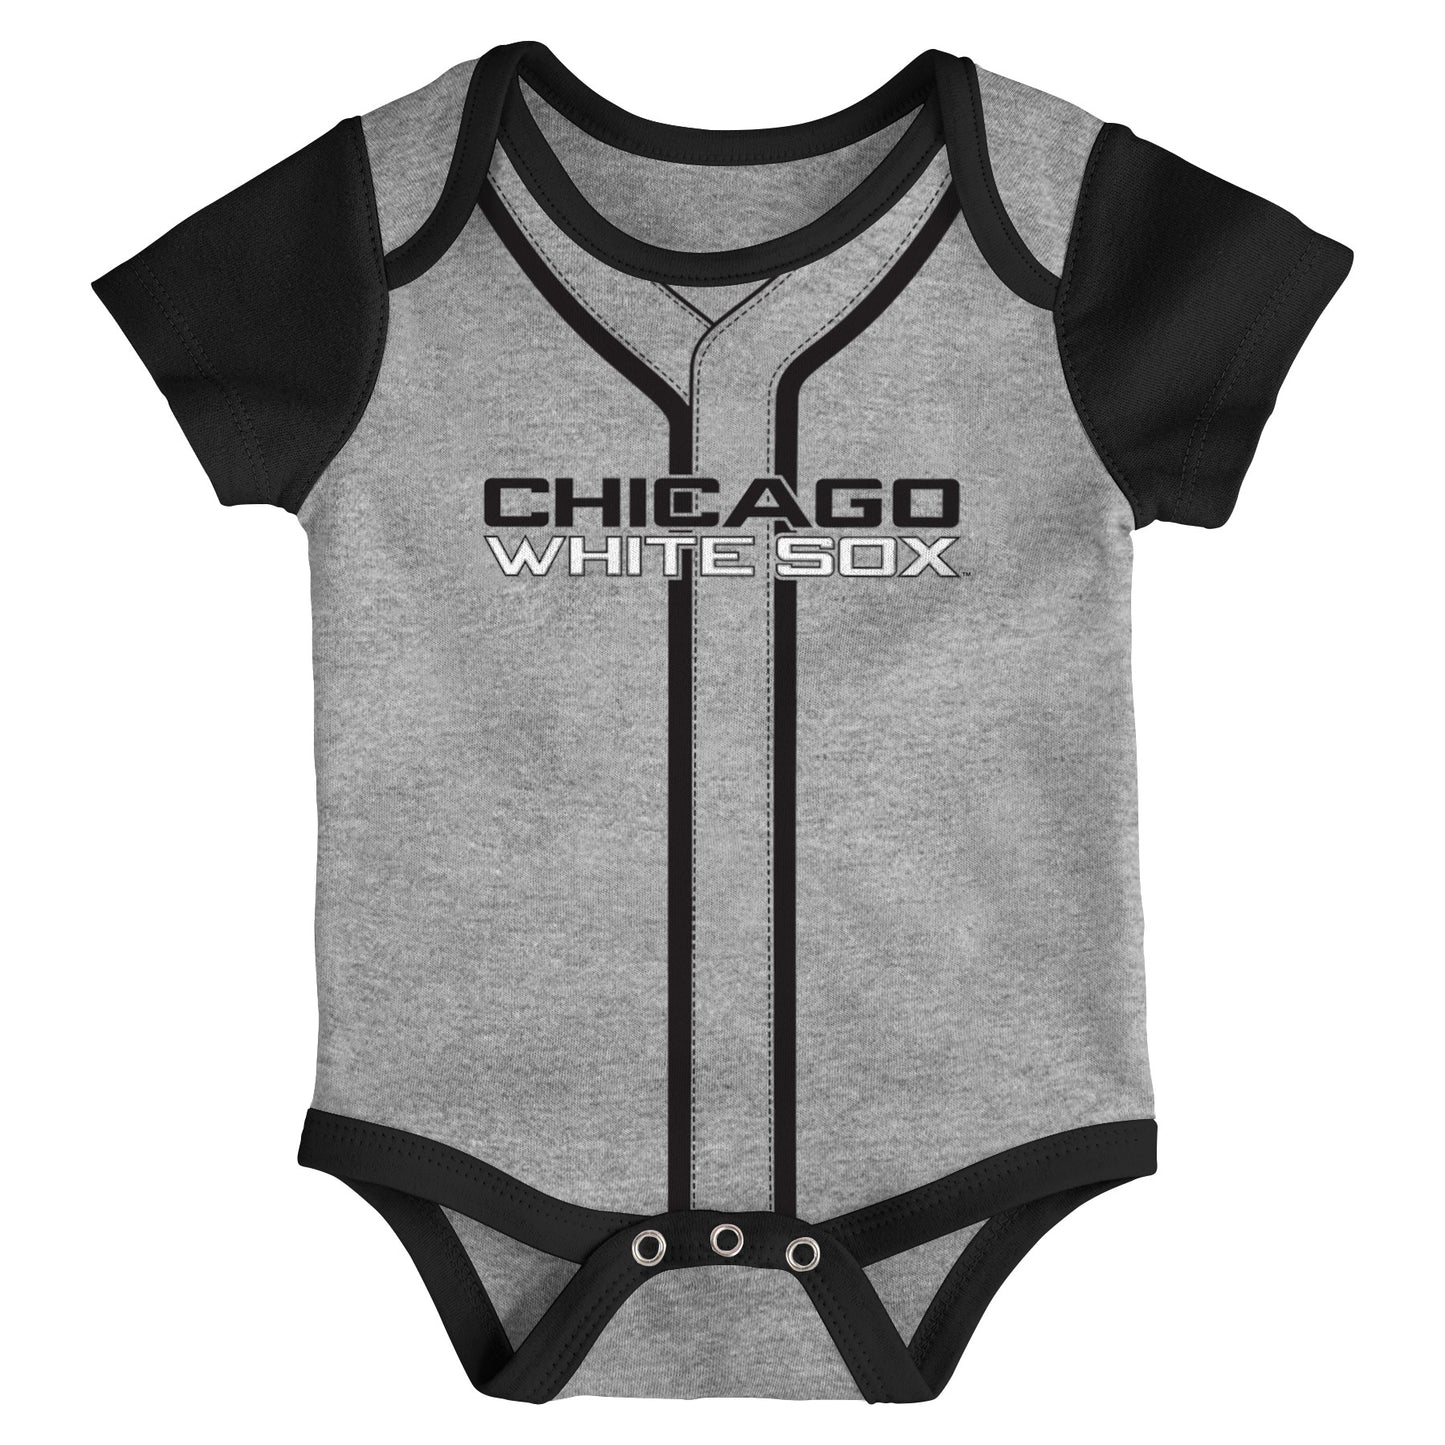 Infant MLB Chicago White Sox Double Short Sleeve 2 Pack Creeper Set